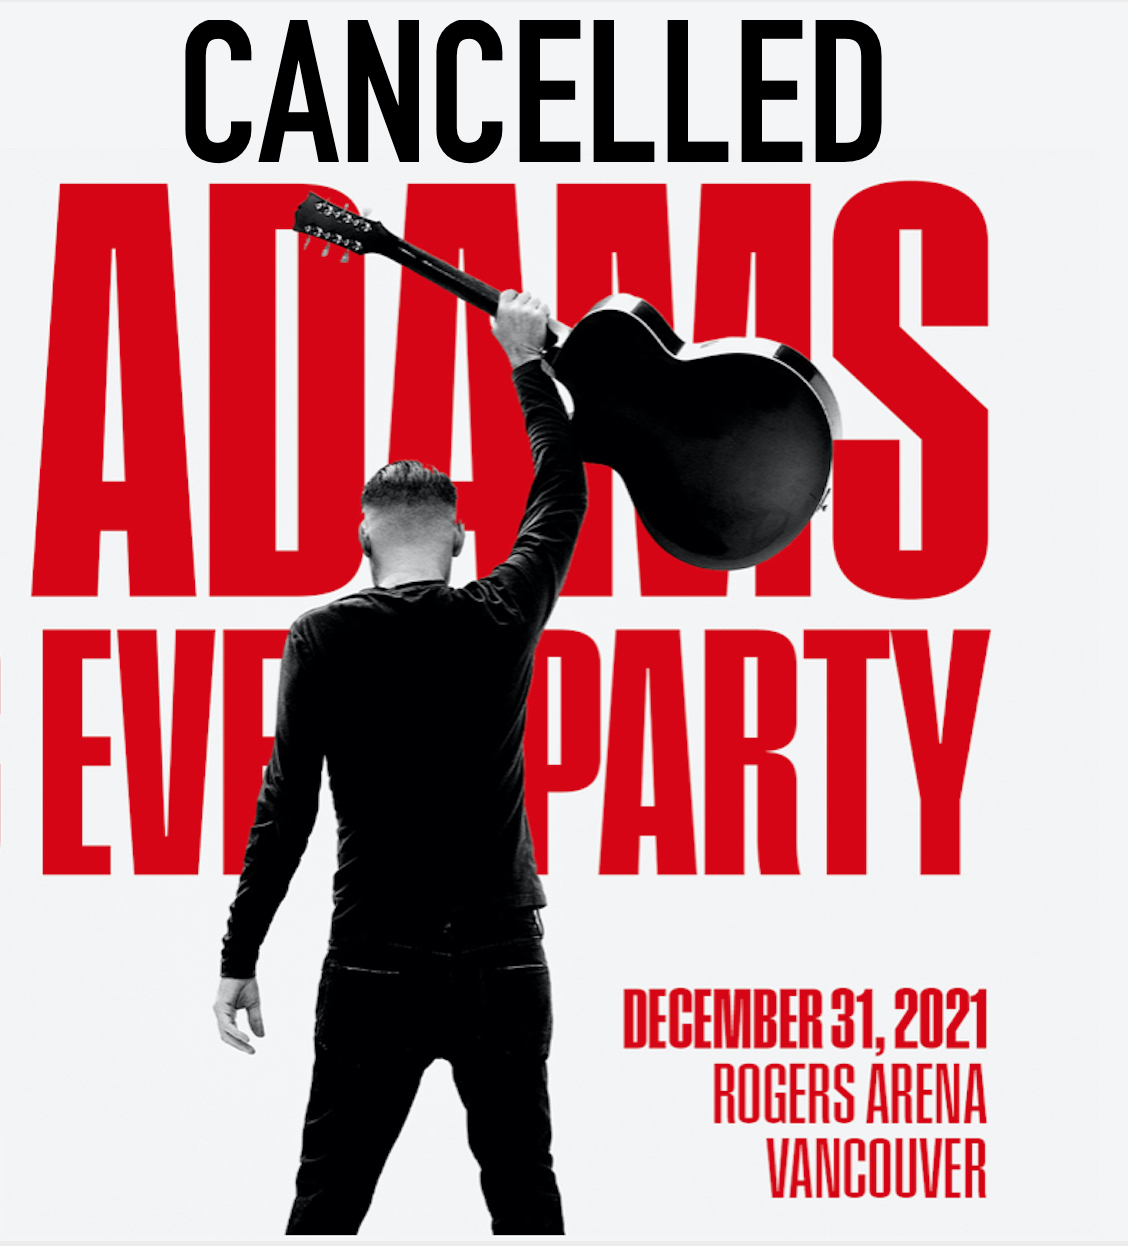 bryan adams tour cancelled